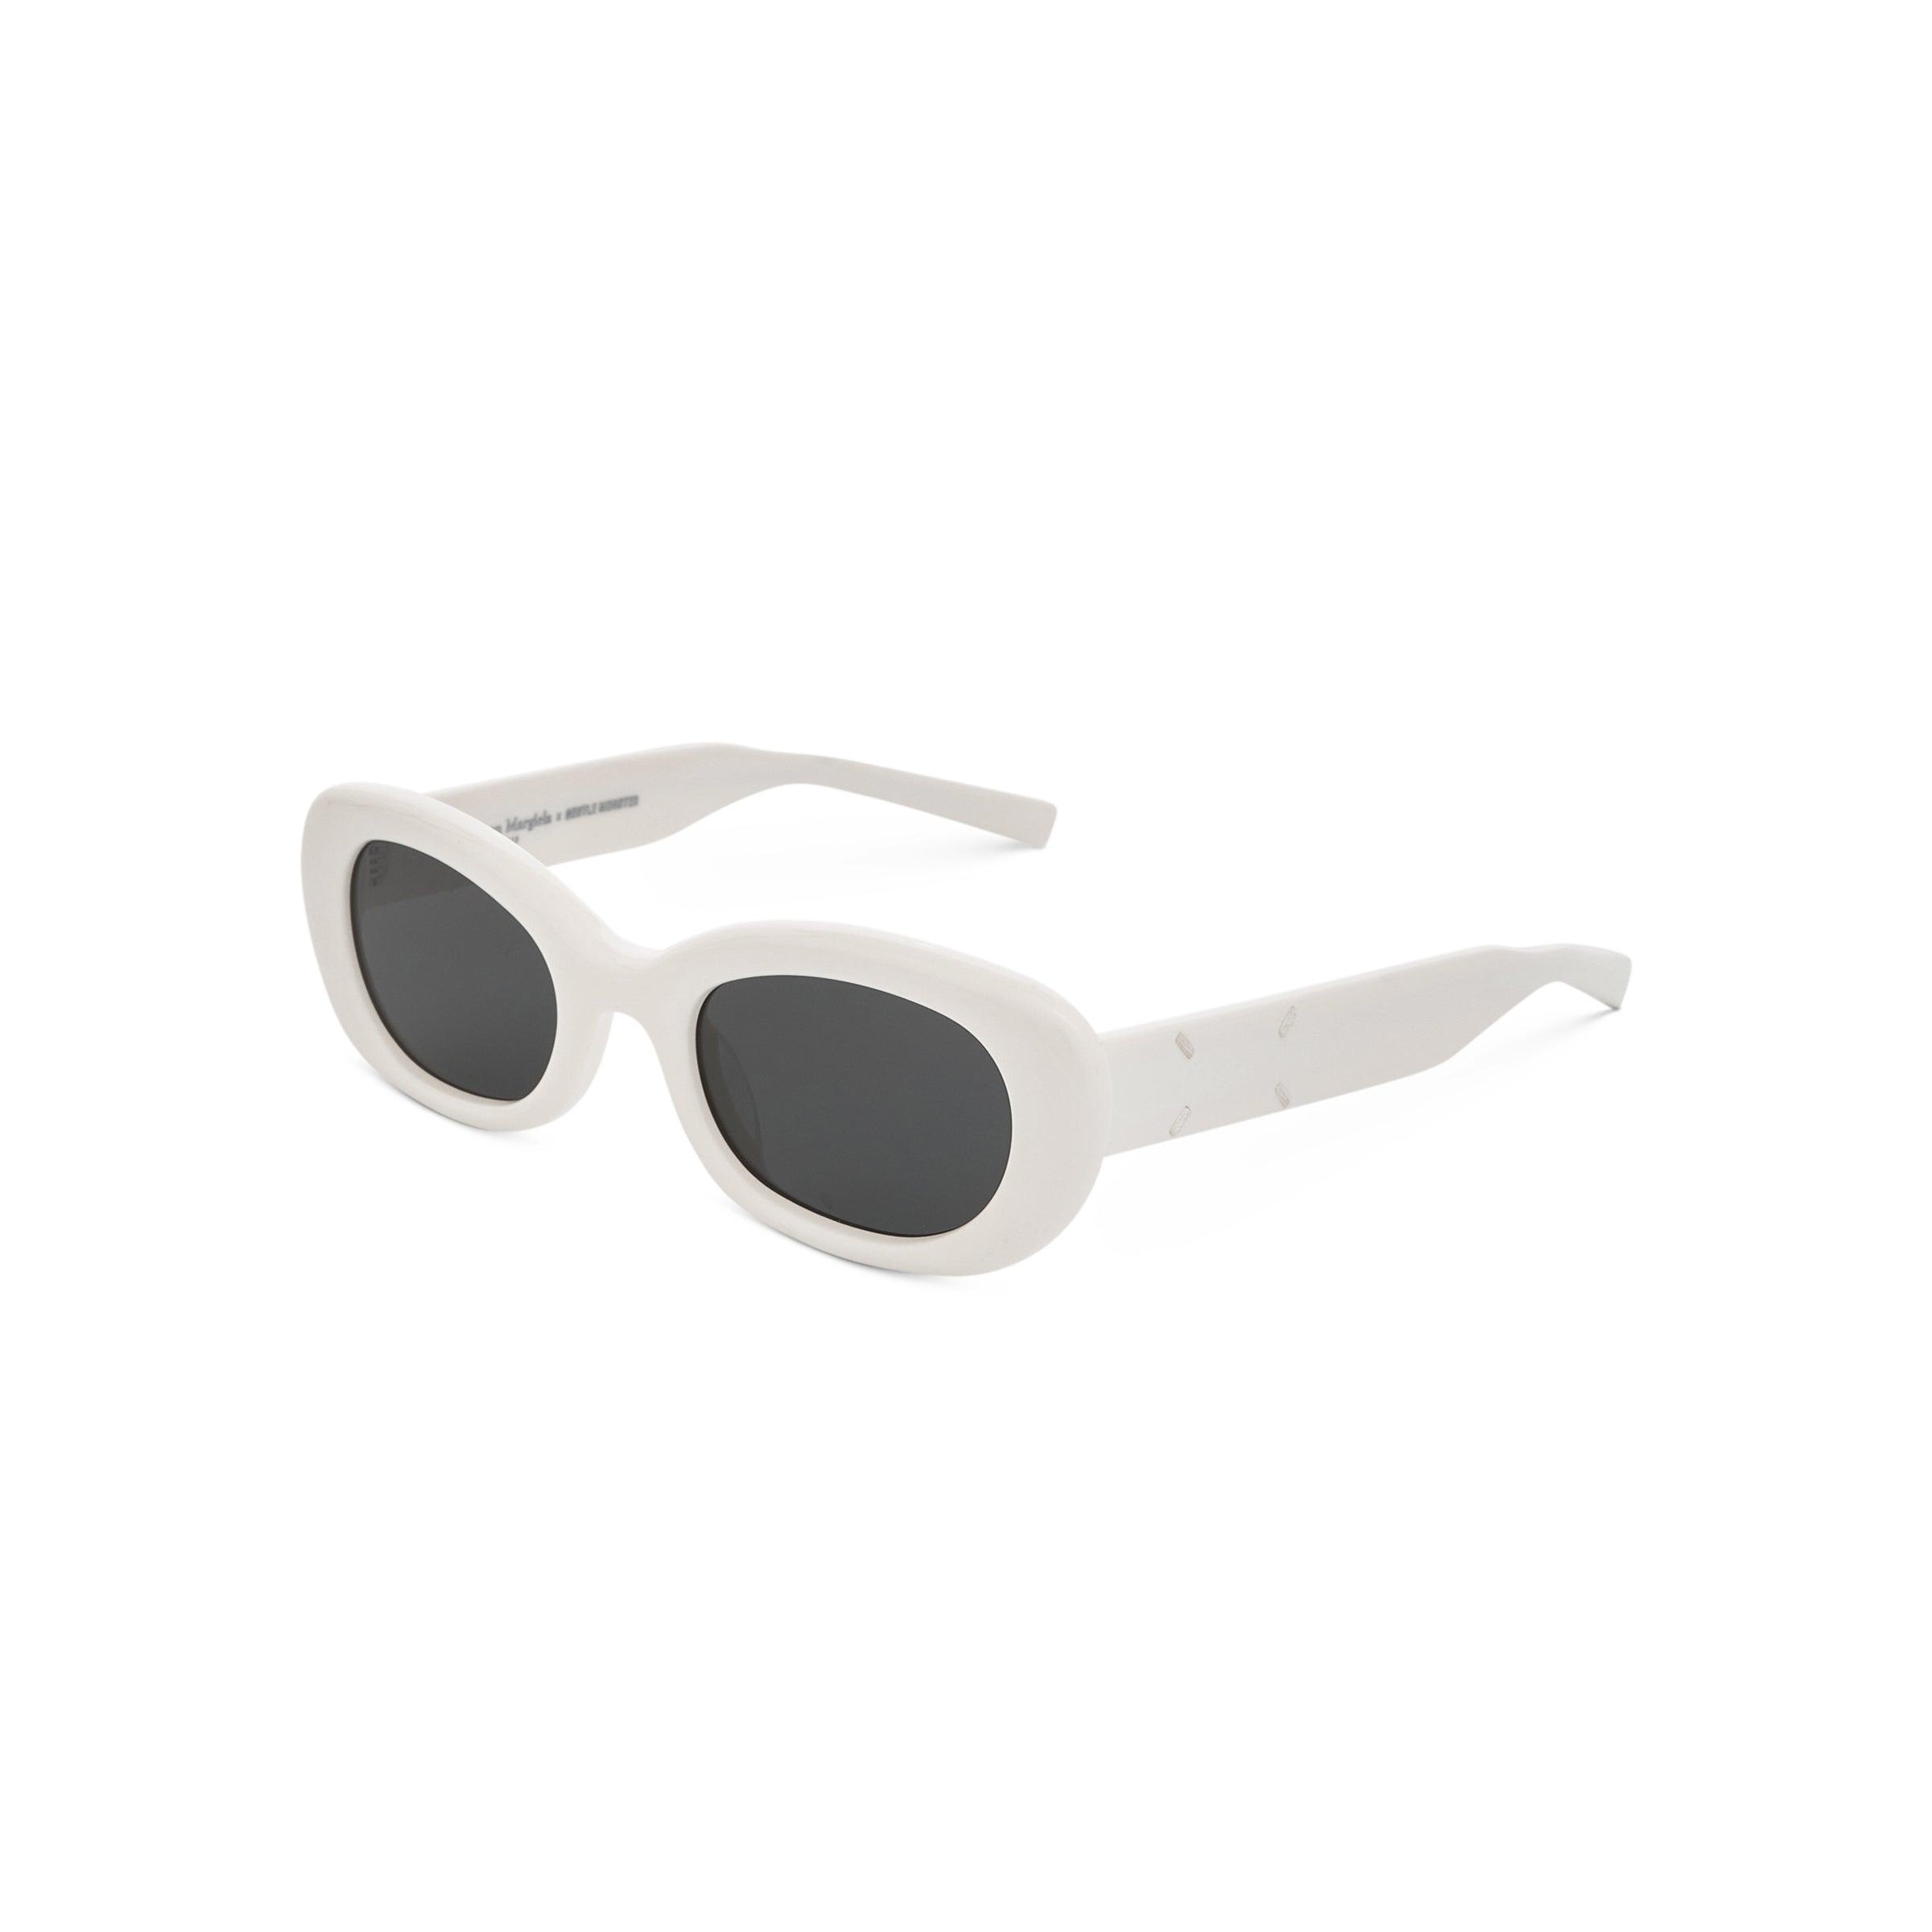 Shop Gentle Monster Unisex Street Style Sunglasses (MM004 W2